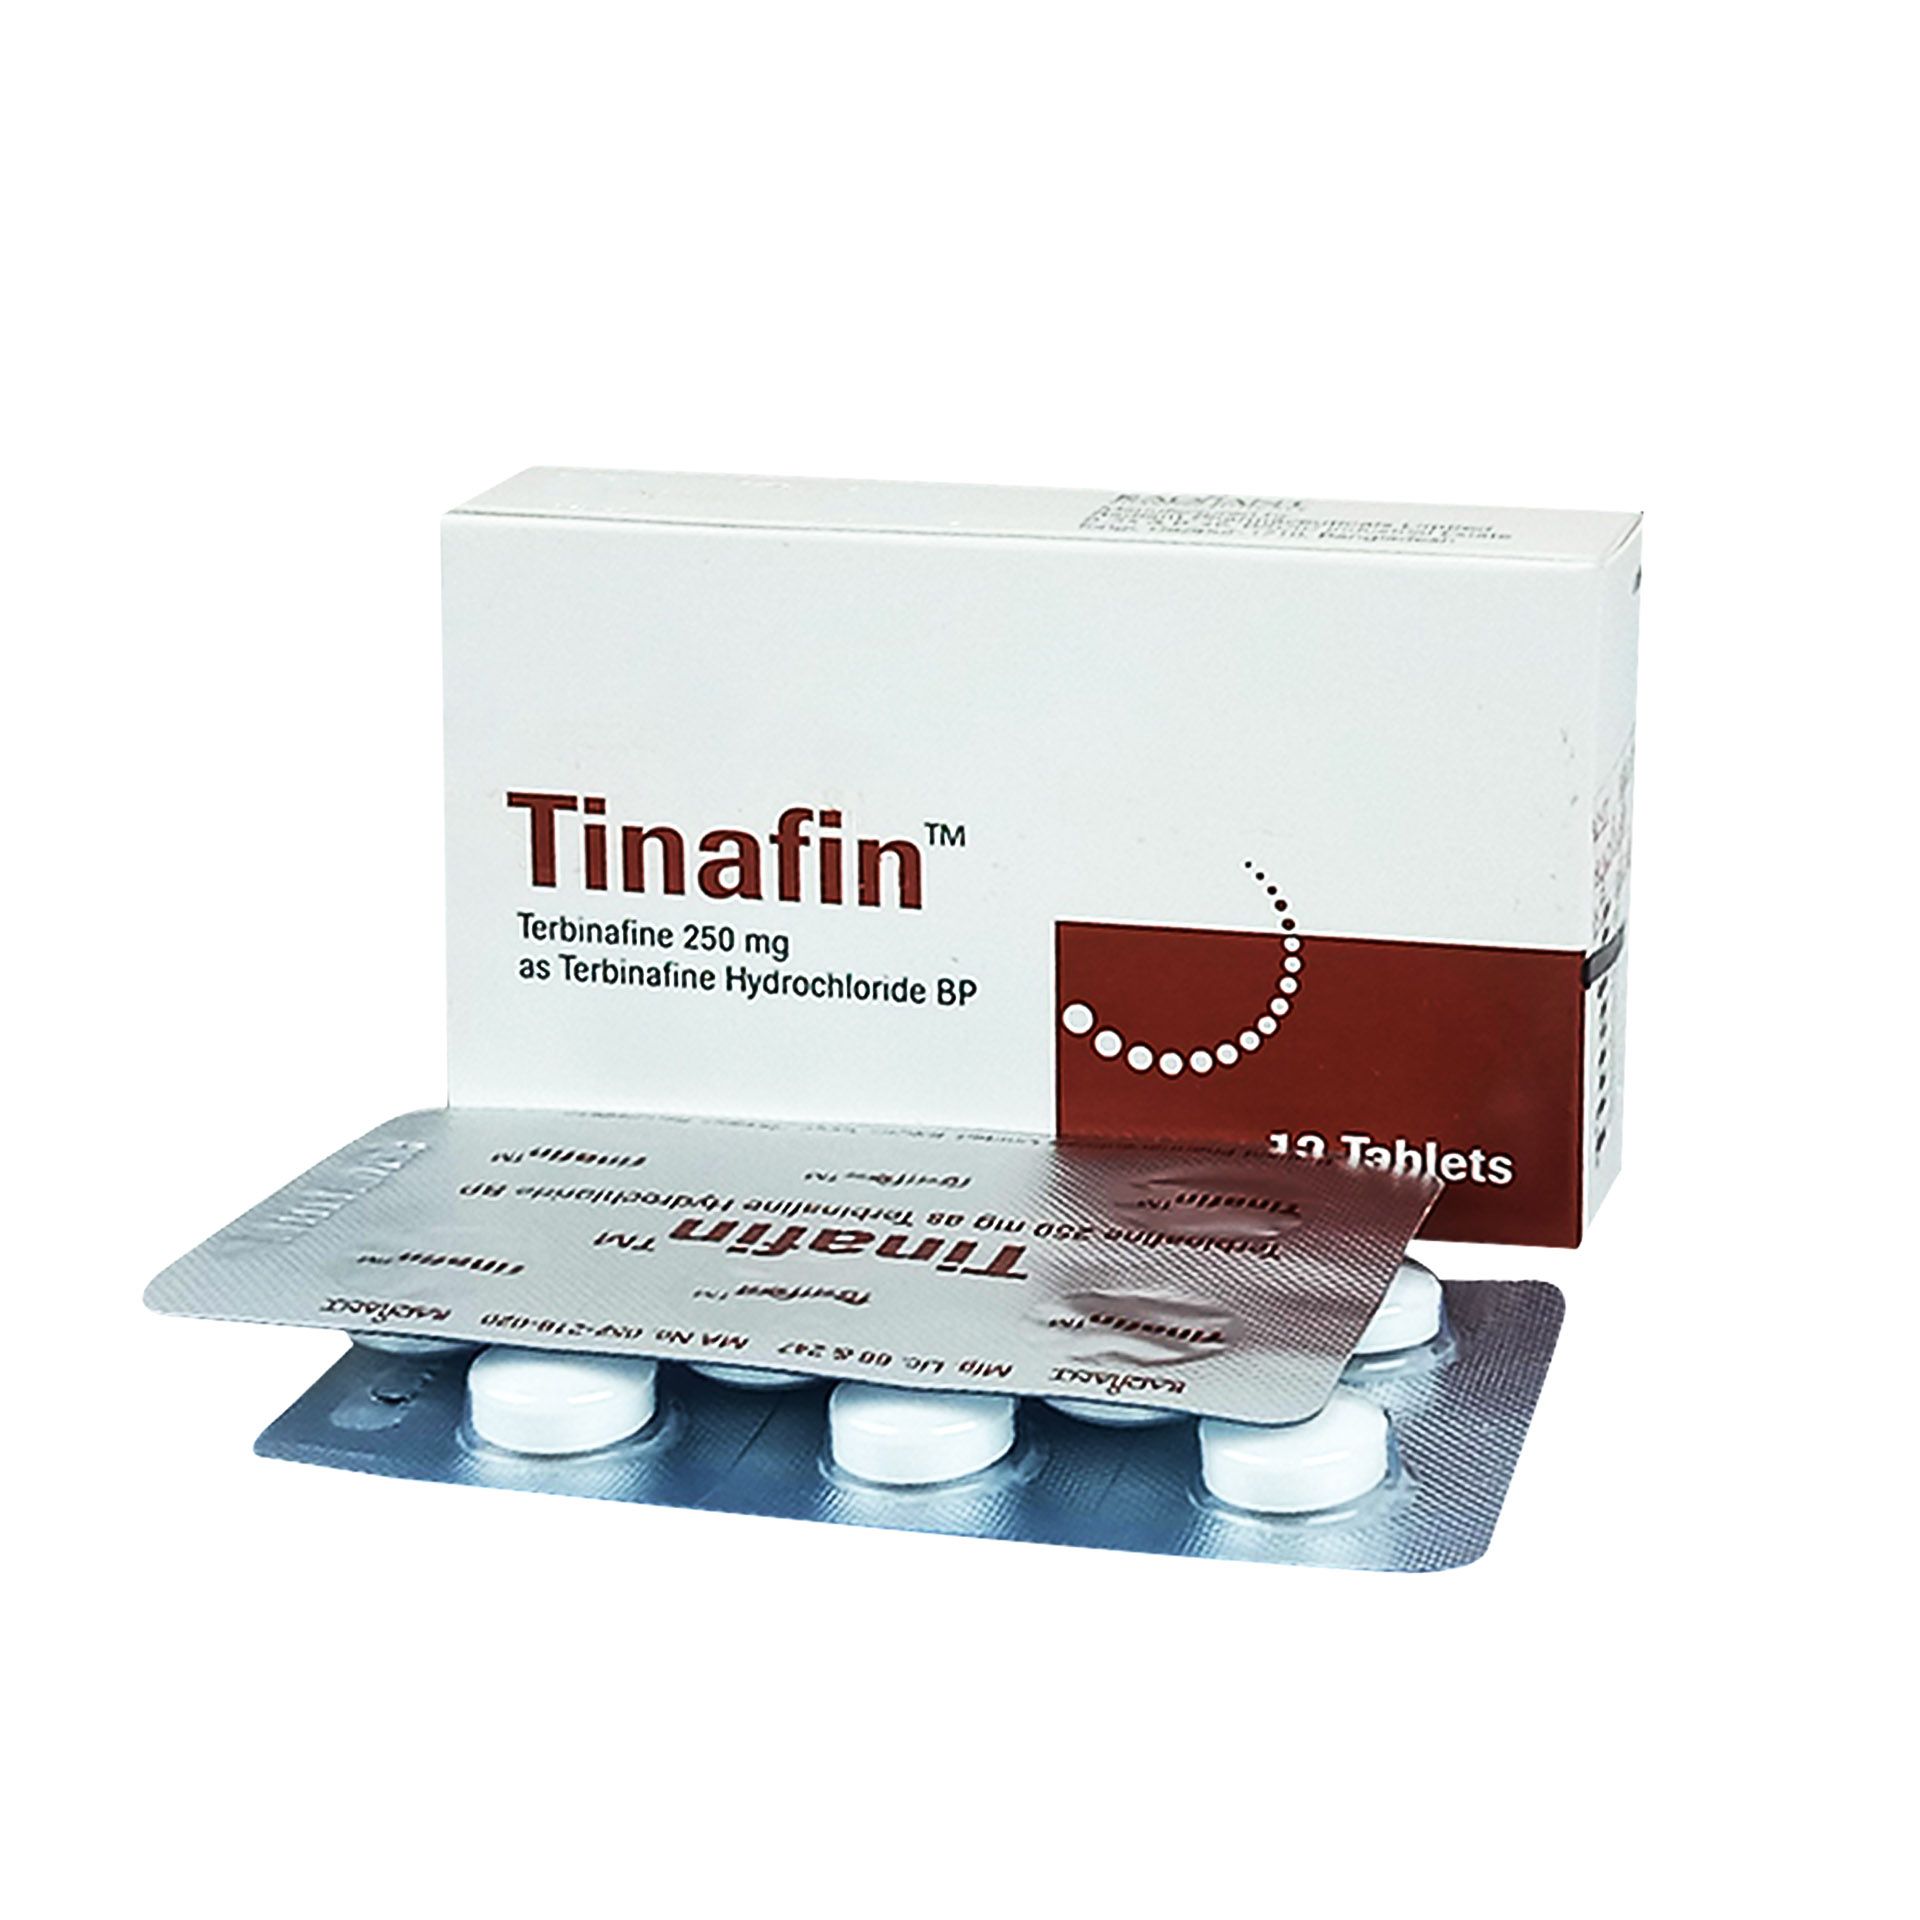 Tinafin 250mg Tablet